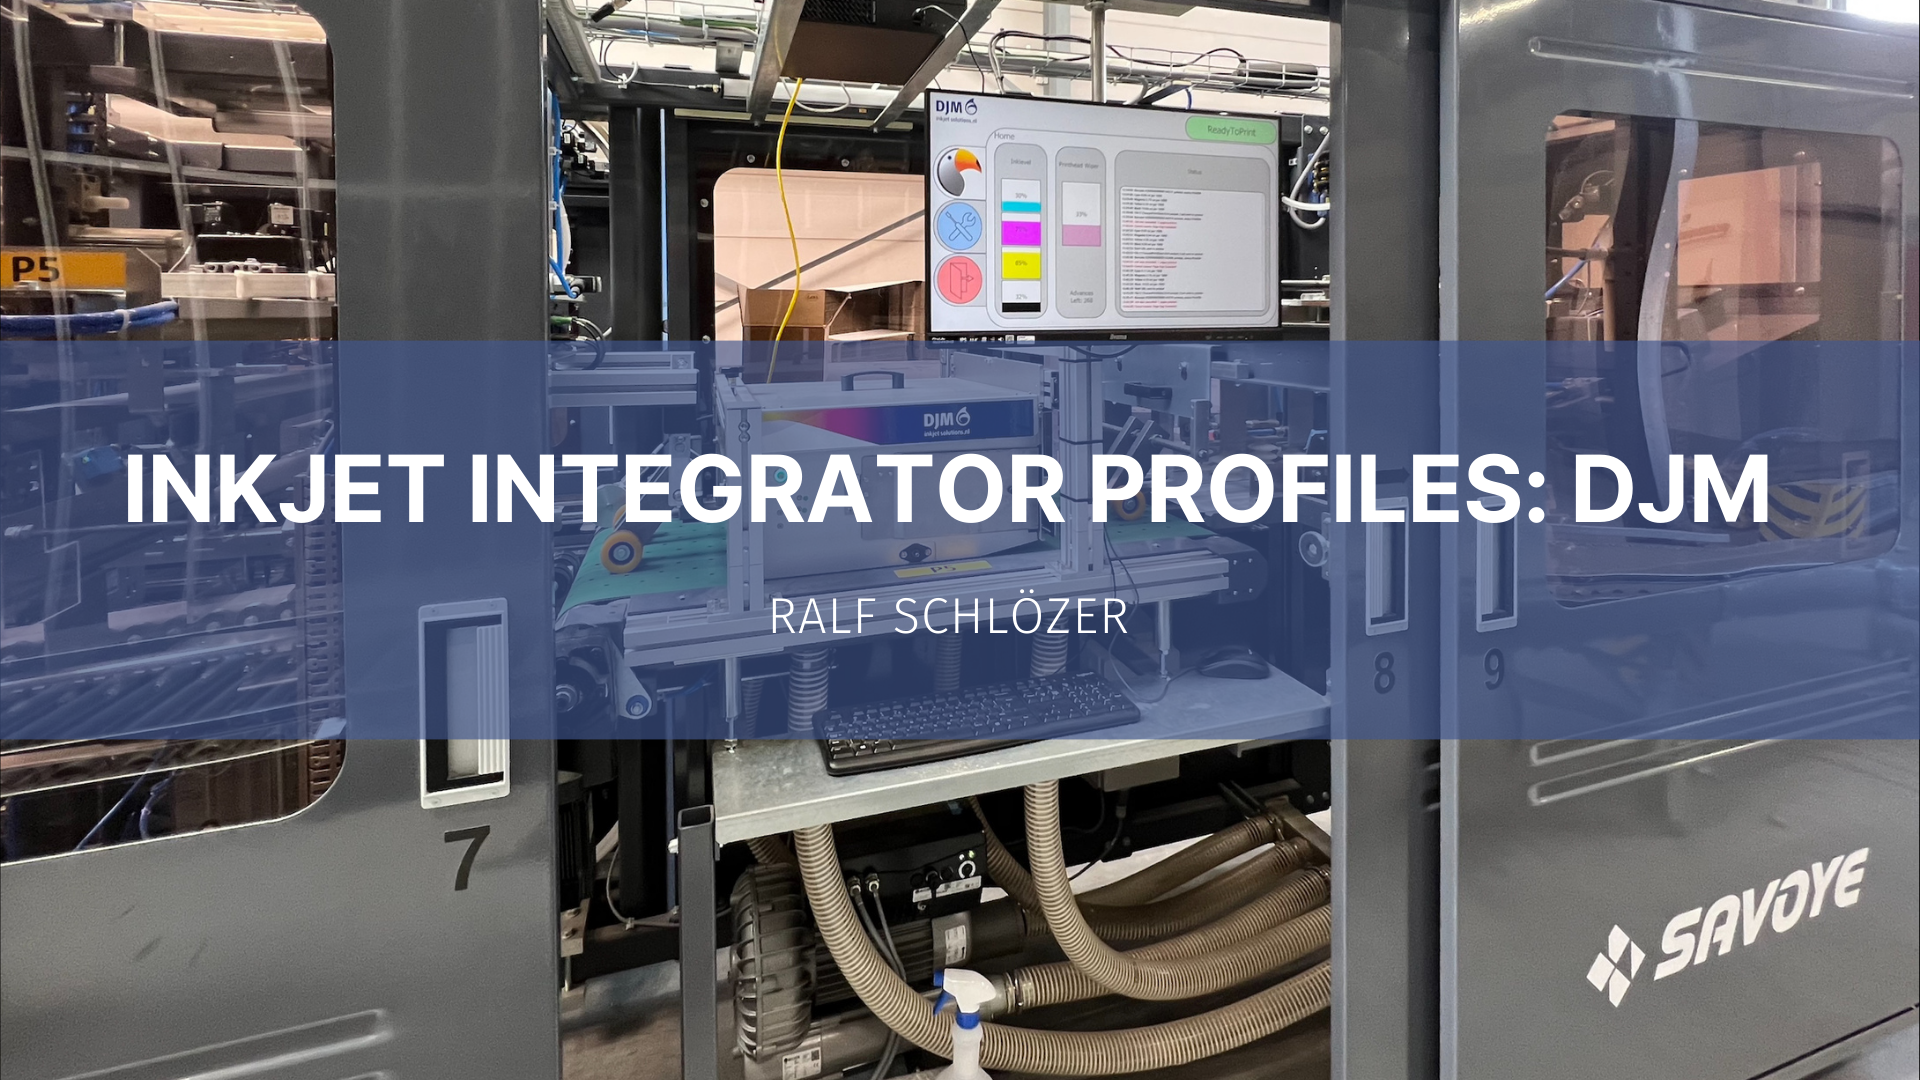 Featured image for “Inkjet Integrator Profiles: DJM”